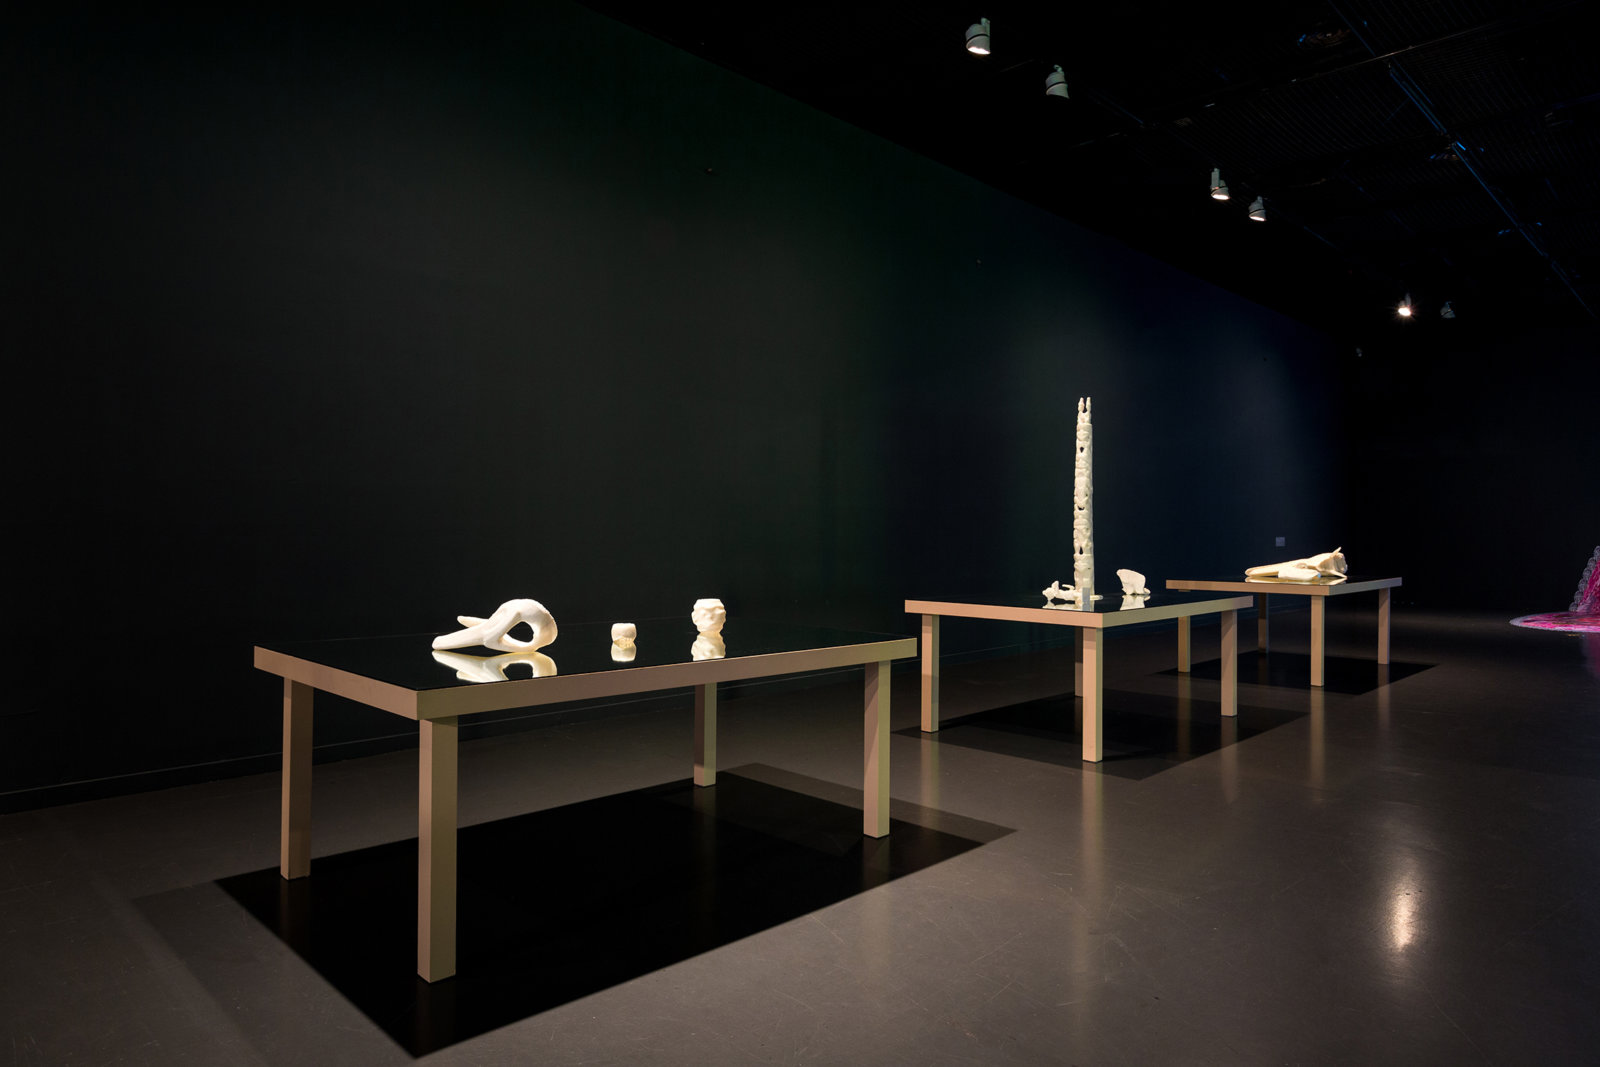 Duane Linklater, UMFA1981.016.002, UMFA1981.016.001, UMFA1981.016.004, UMFA1981.016.003, UMFA1982.001.008, UMFA2003.10.20 (Tafoya), UMFA2003.10.19 UMFAED.1998.3.21, 2015, 8 natural ABS 3D prints, mirrored tables, dimensions variable. Installation view, SeMA Biennale, Mediacity Seoul, Seoul Museum of Art, Seoul, Korea, 2016.